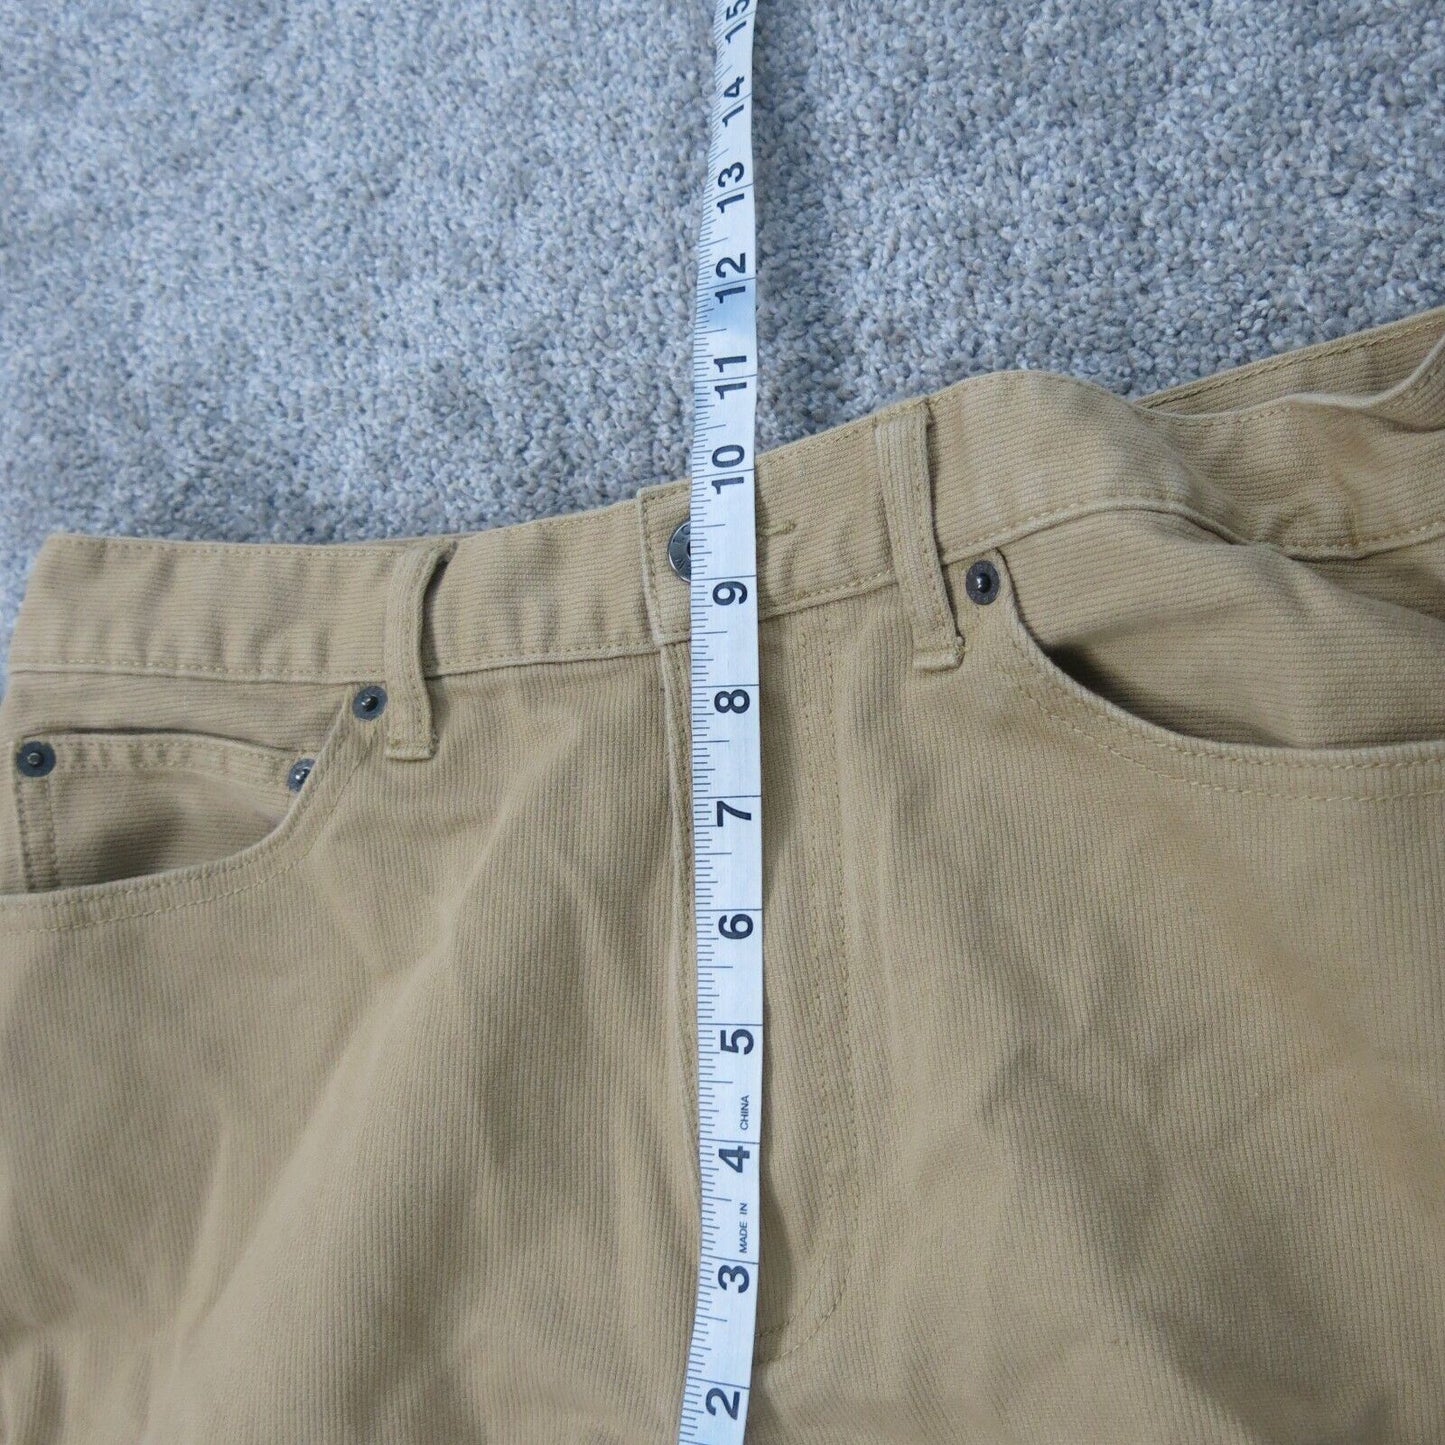 J Crew Mens Cargo Pant five Pockets skinny Leg Fit Mid Rise Khaki size 31X32